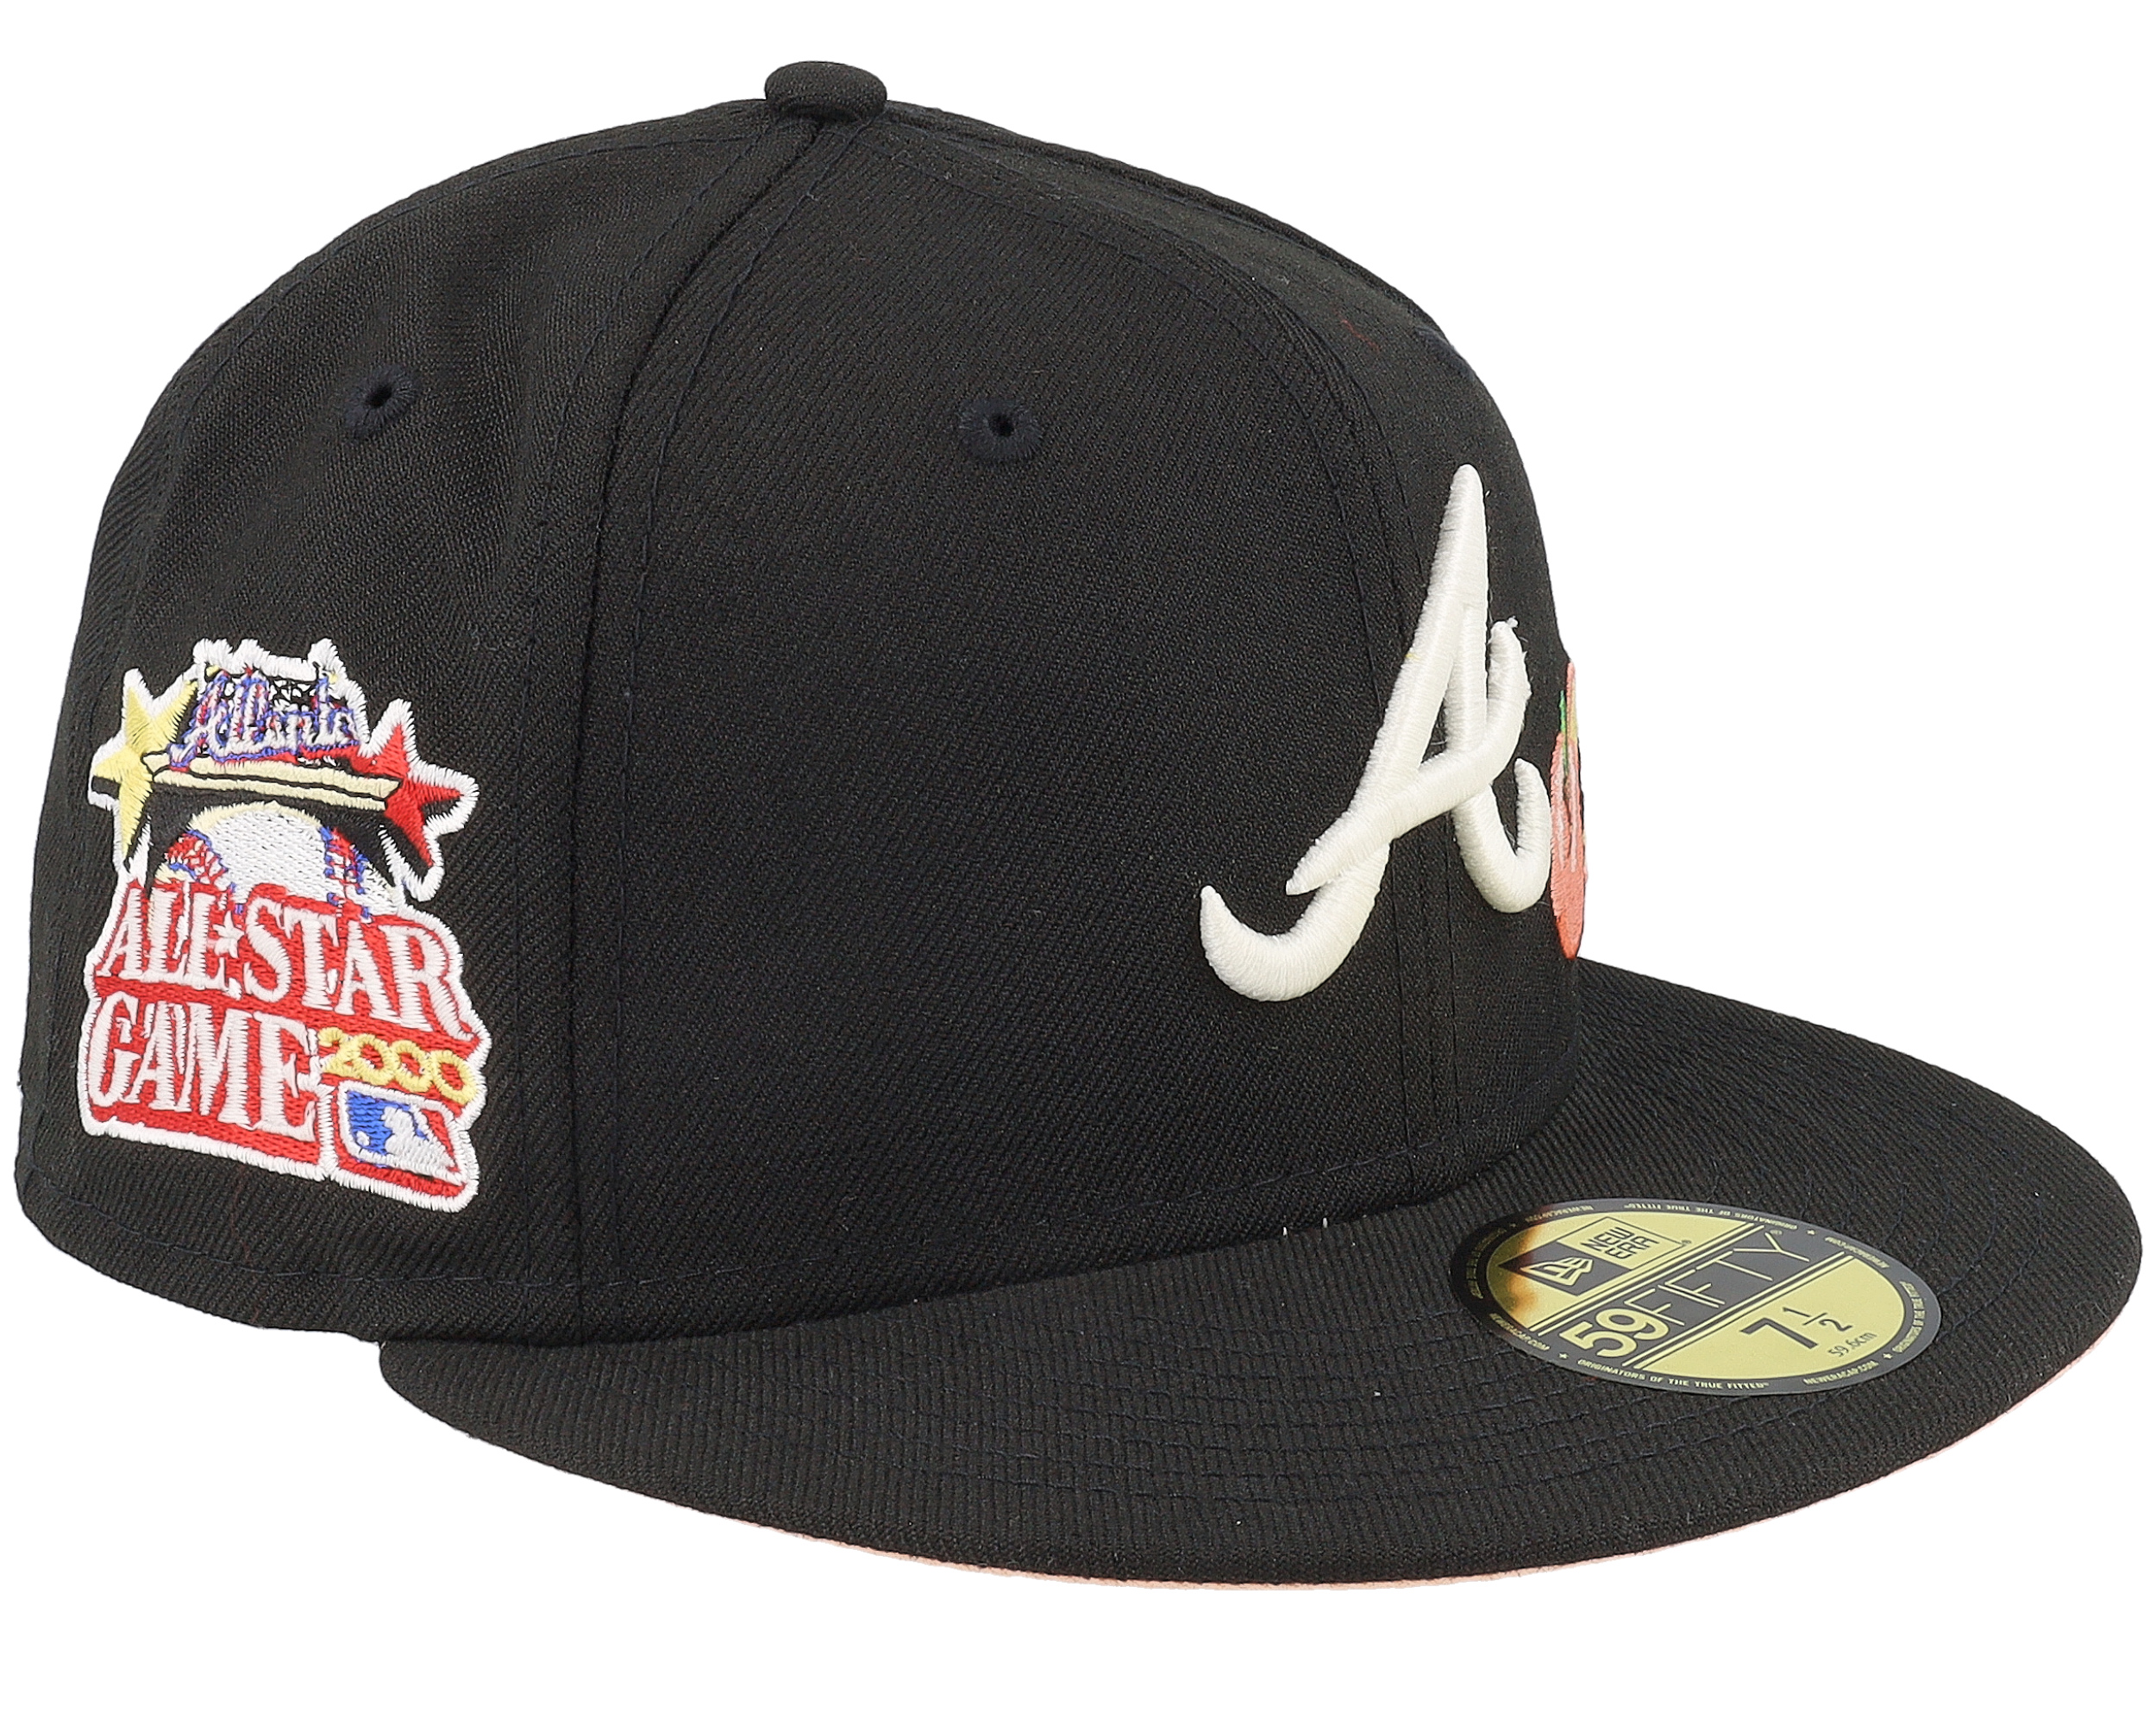 Atlanta Braves 59FIFTY Black/Peach Fitted - New Era cap | Hatstoreworld.com